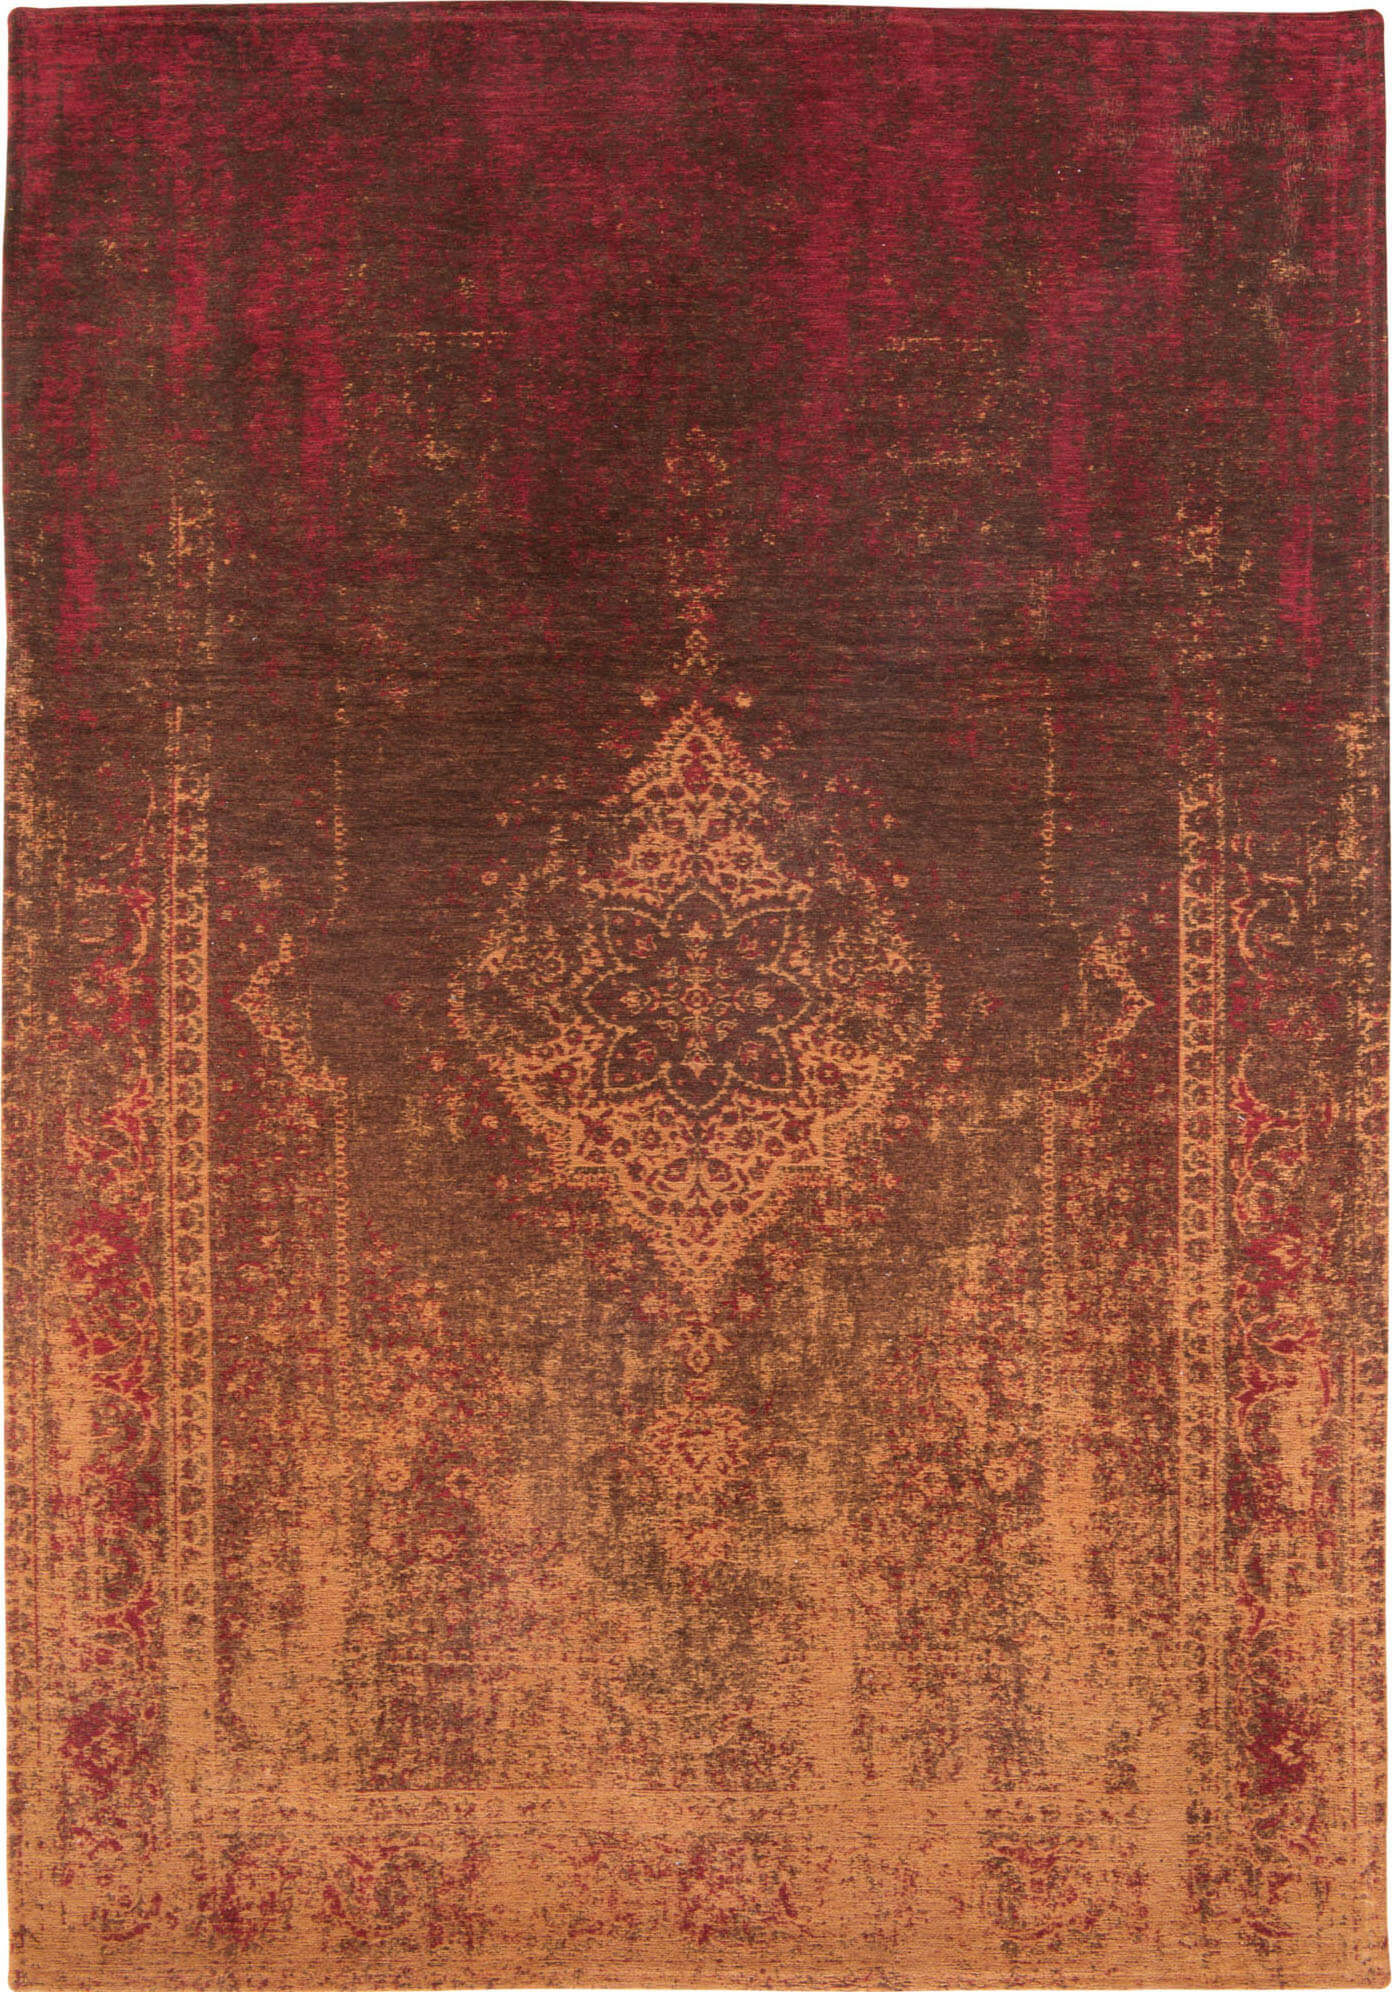 Persian Vintage Style Rug Mango Brown ☞ Size: 170 x 240 cm